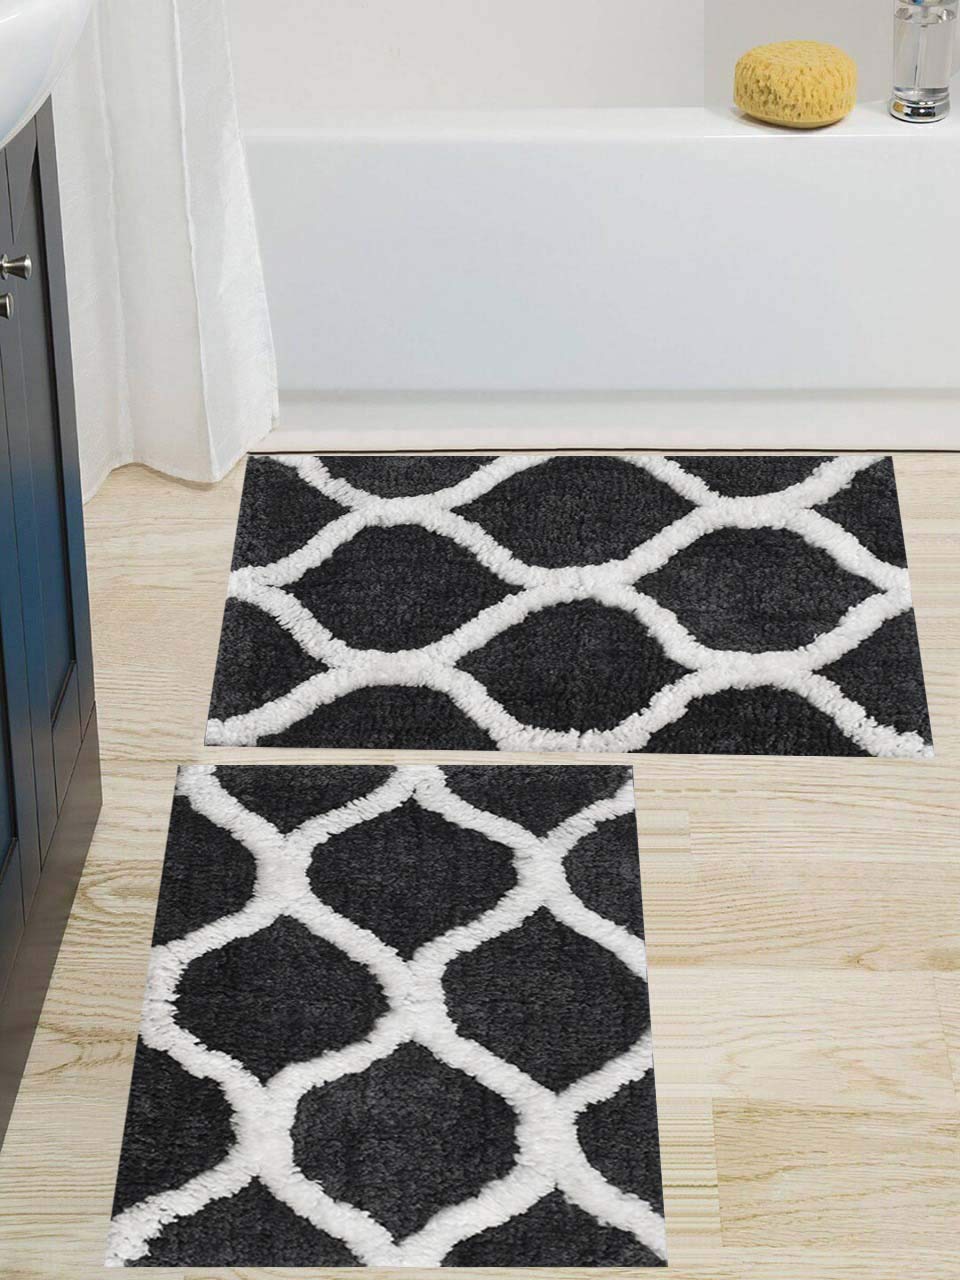 Floor Mats: Glorious Super Soft Microfiber Designer Anti Slip Bathmat